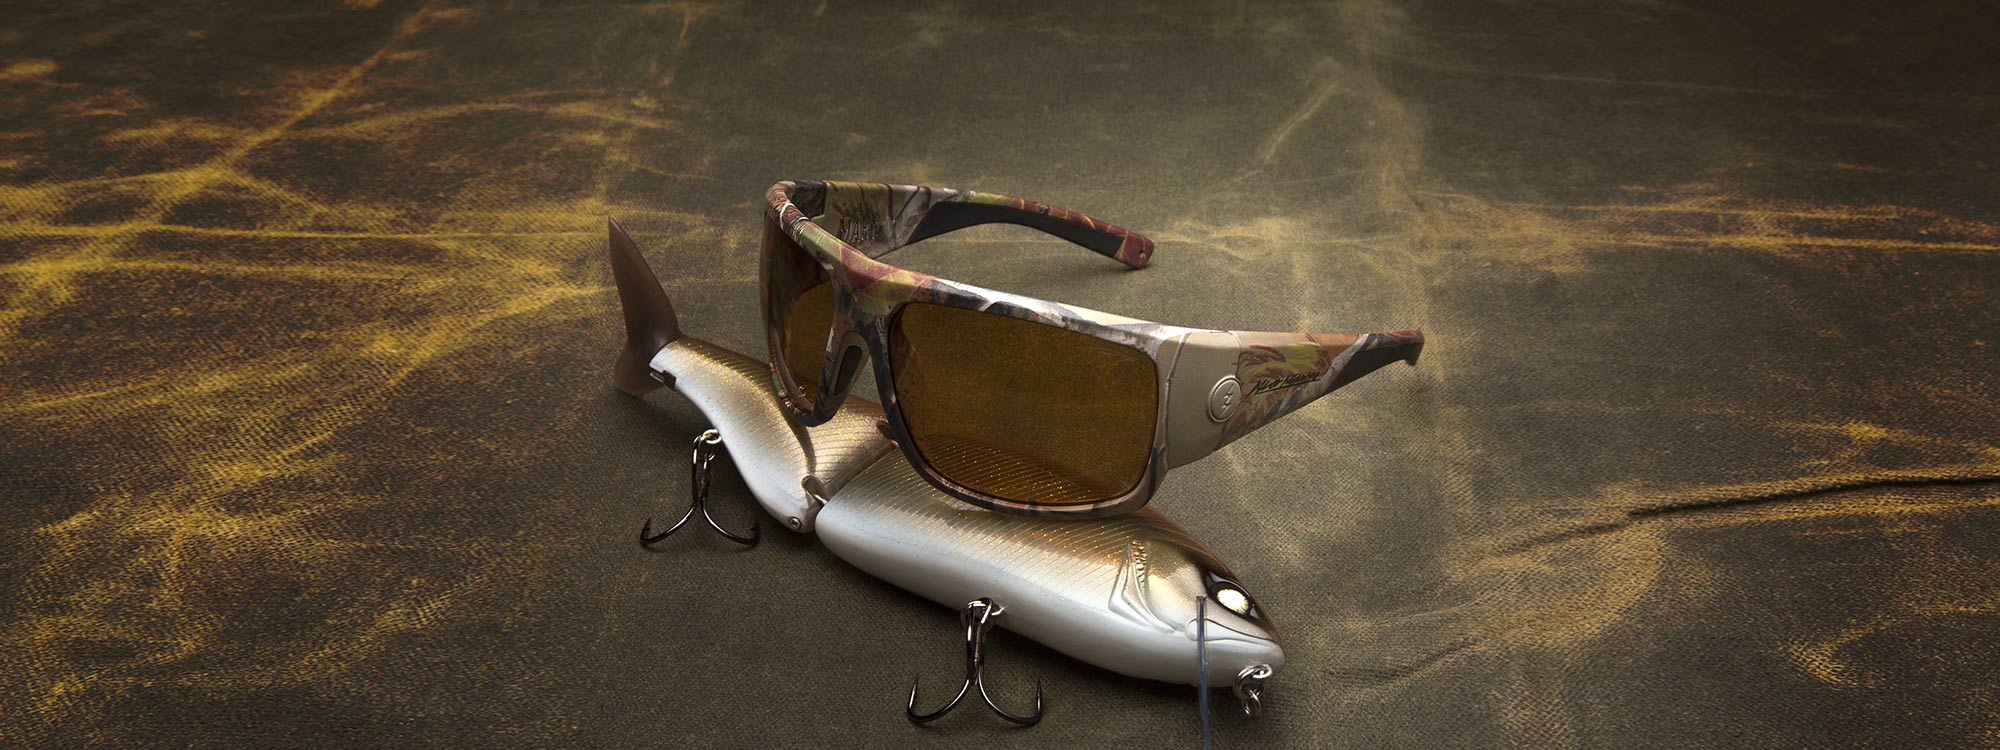 Electric mahi sunglass camo with bronze lens fishing sunglass polarized lens